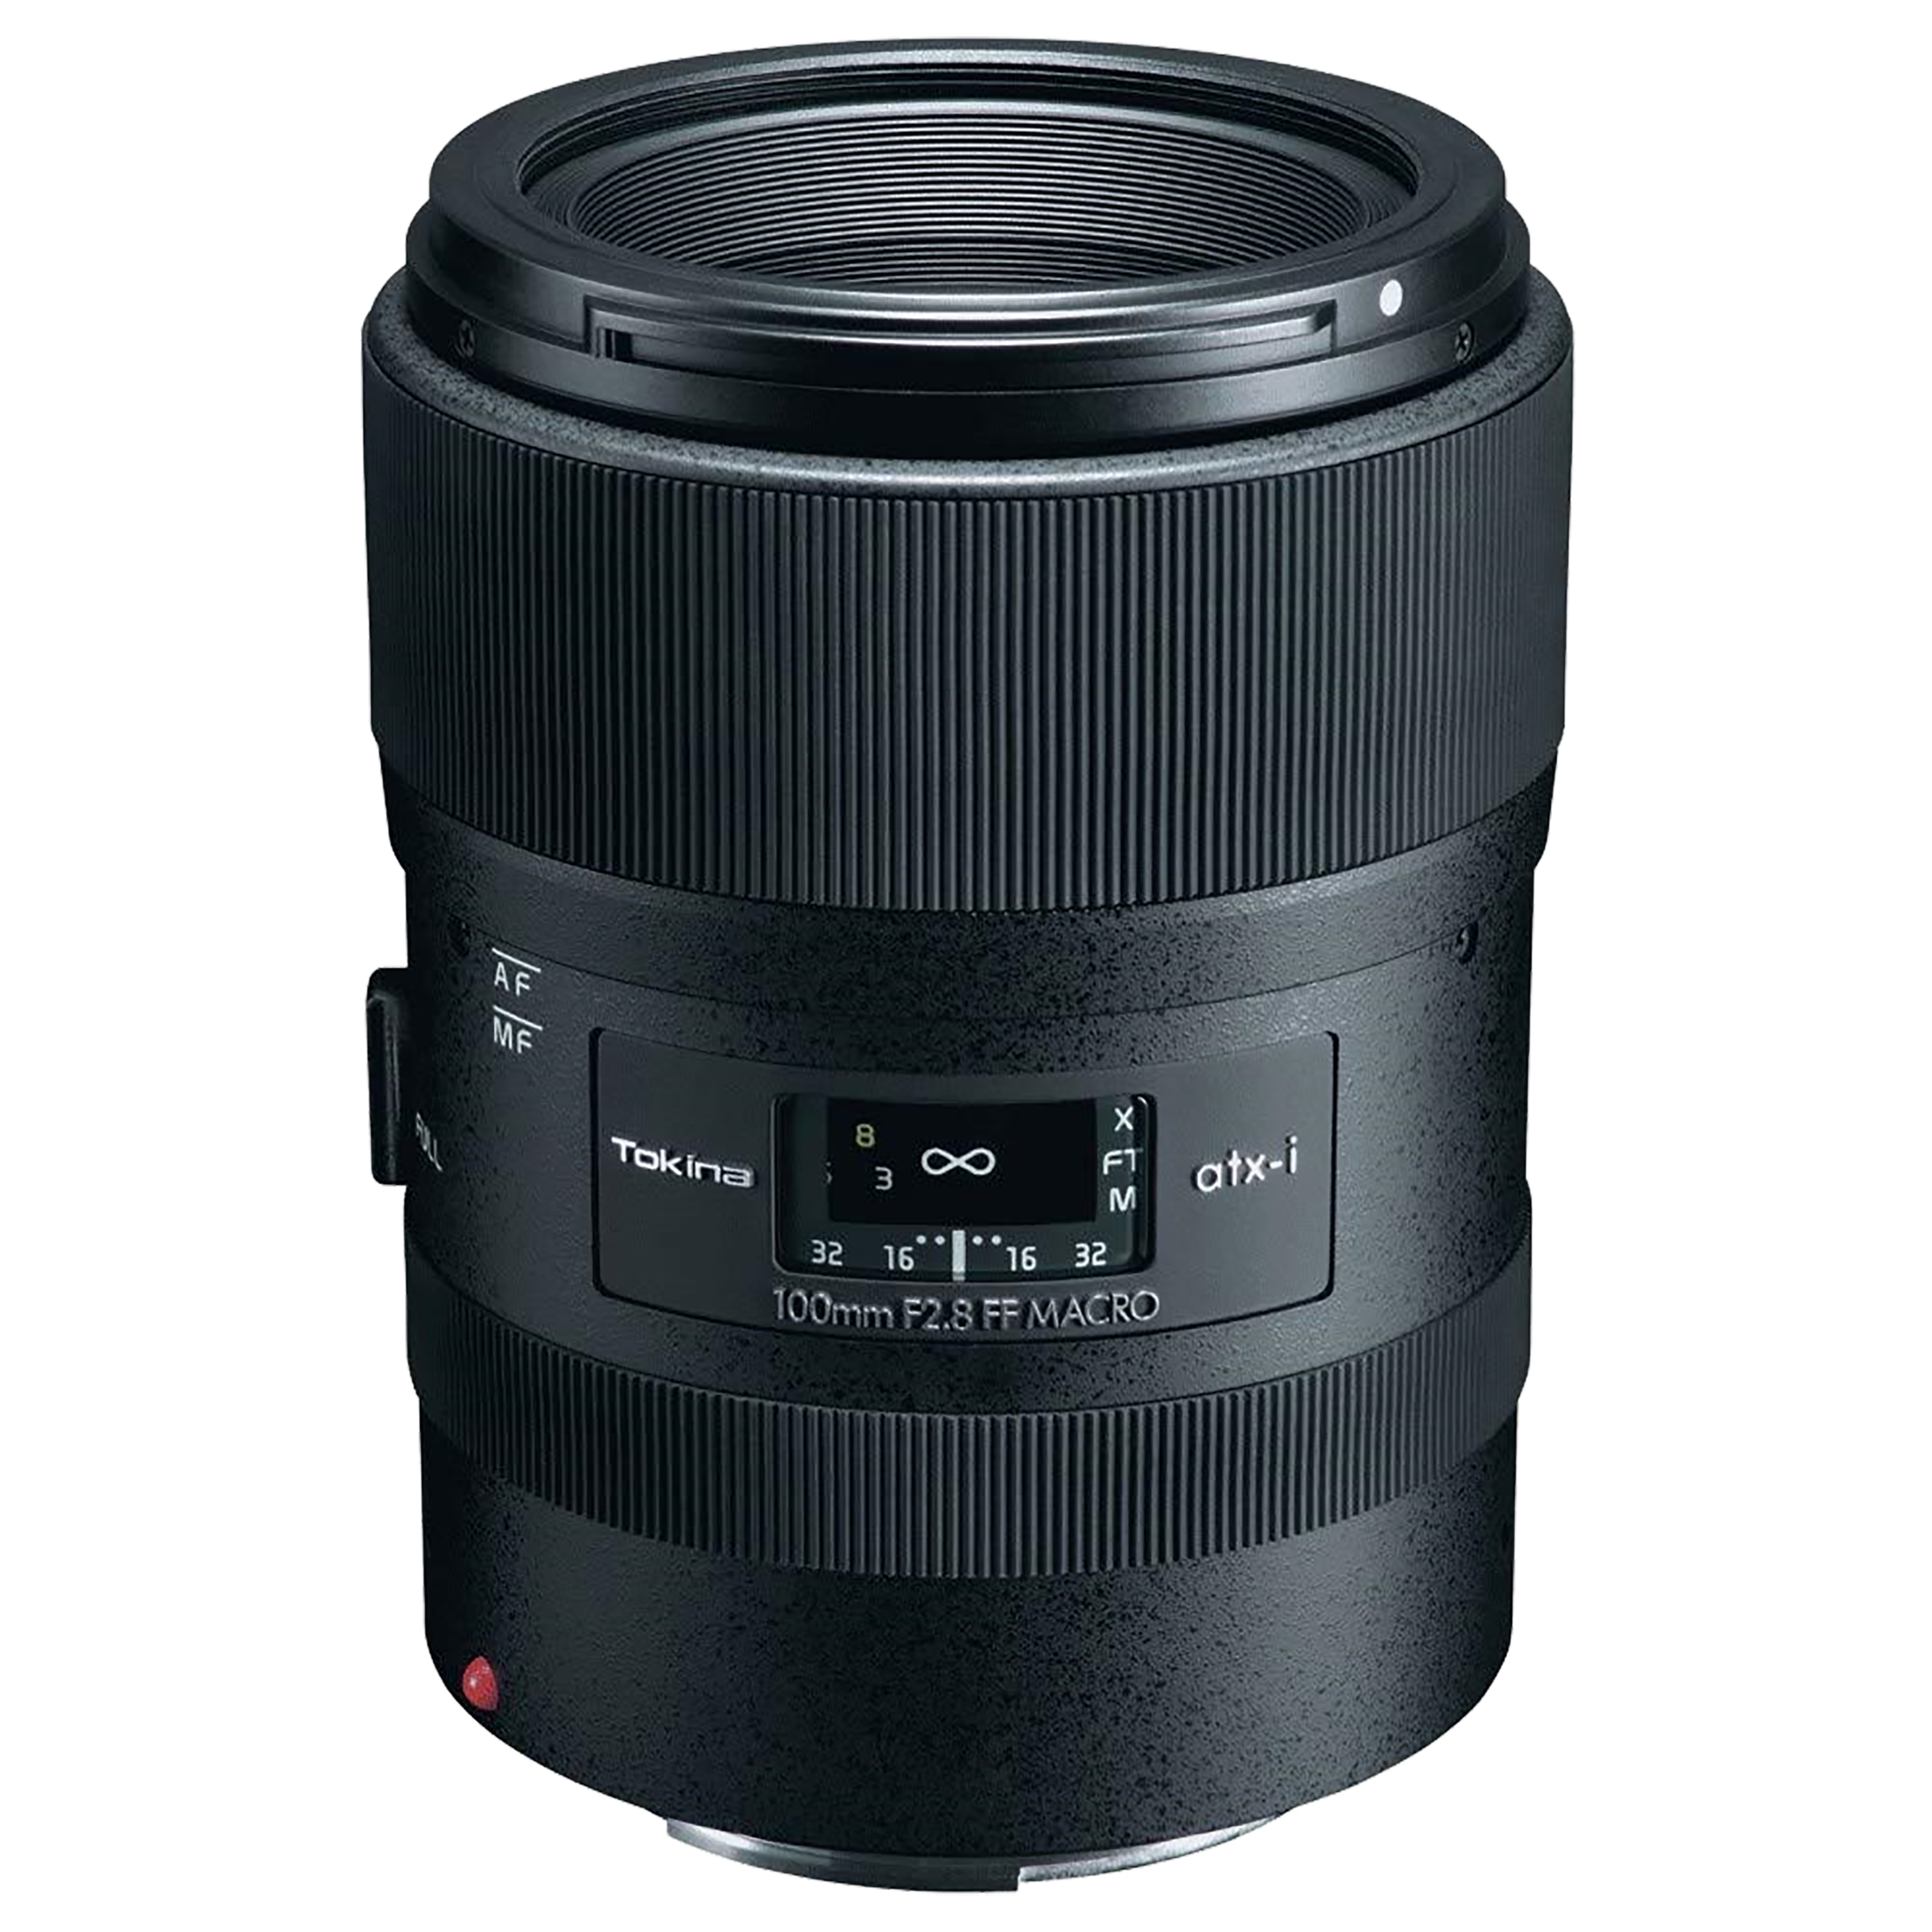 Tokina Atx-i 100 mm Max-f/2.8 And Min-f/32 Macro Lens (Extending Barrel Focusing System, 11D2664K01, Black)_1